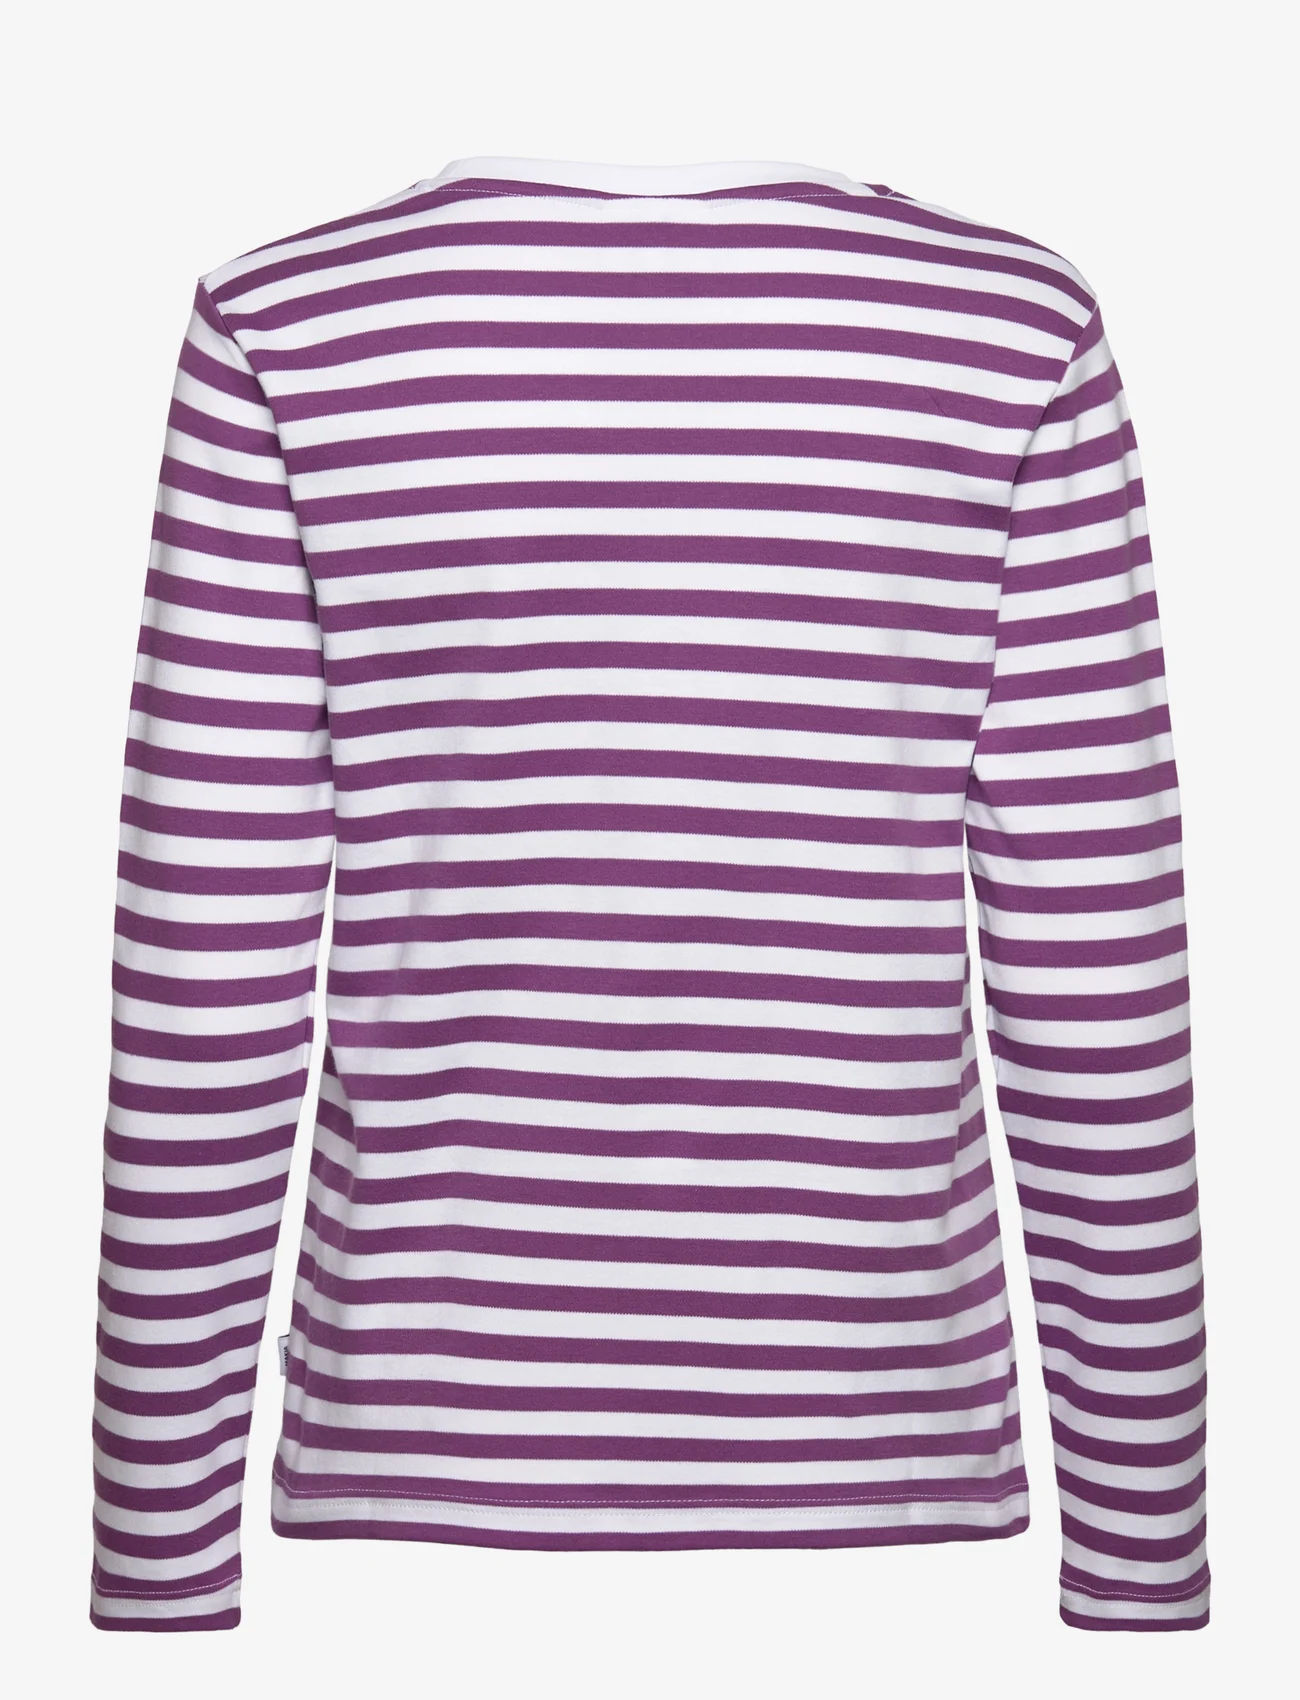 Makia - Verkstad Long Sleeve - tops met lange mouwen - purple-white - 1